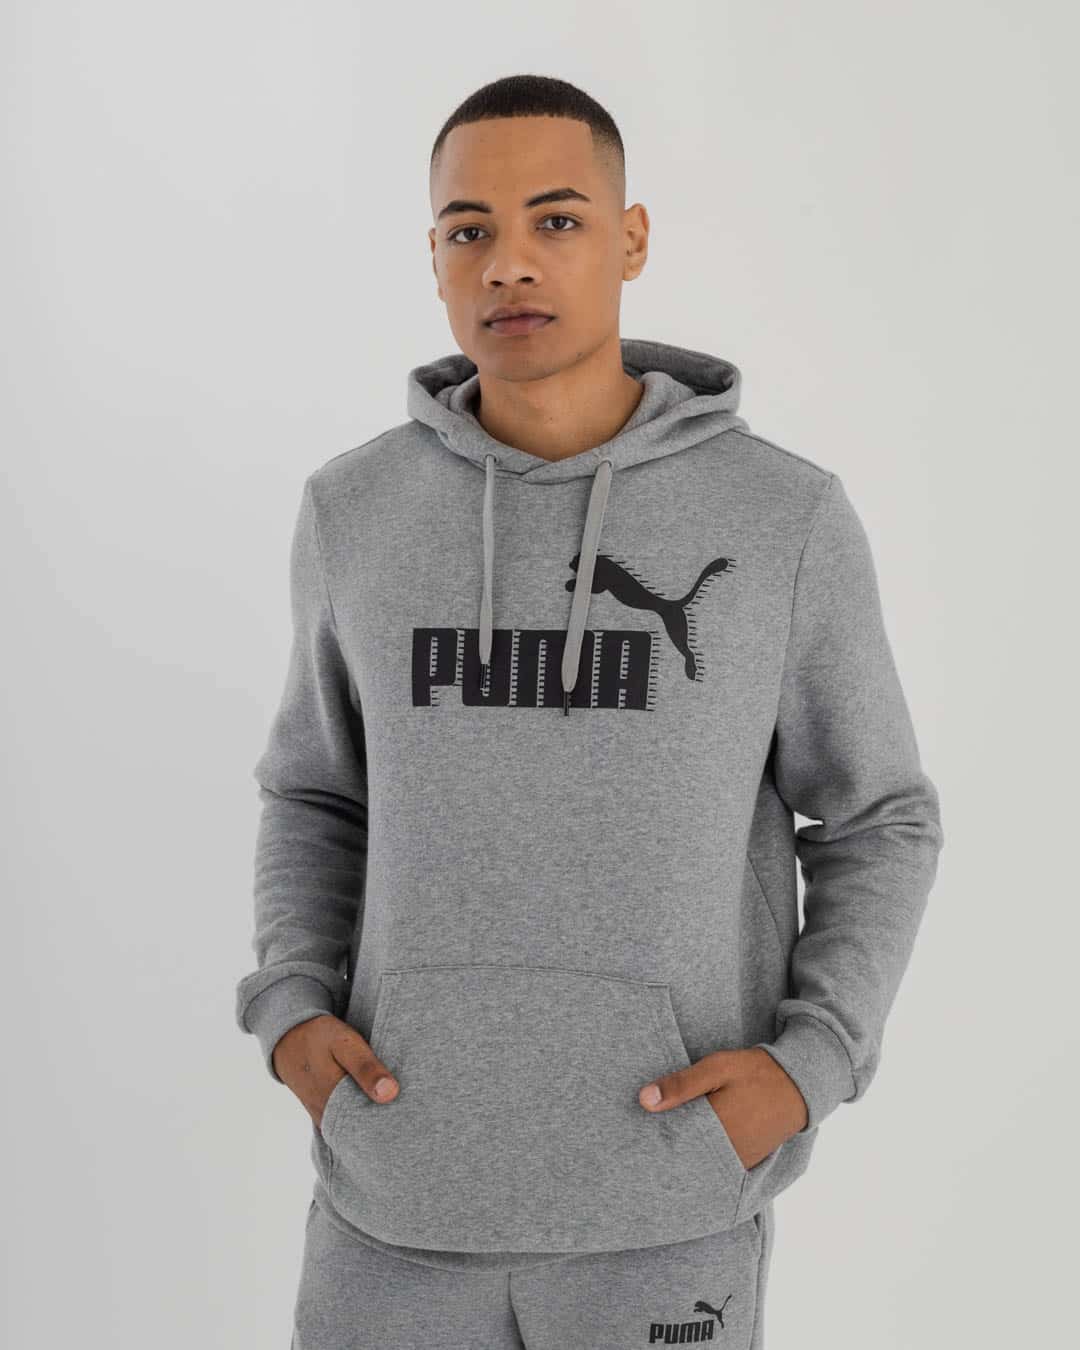 man wearing Puma Hoodie with Puma logo on chest,